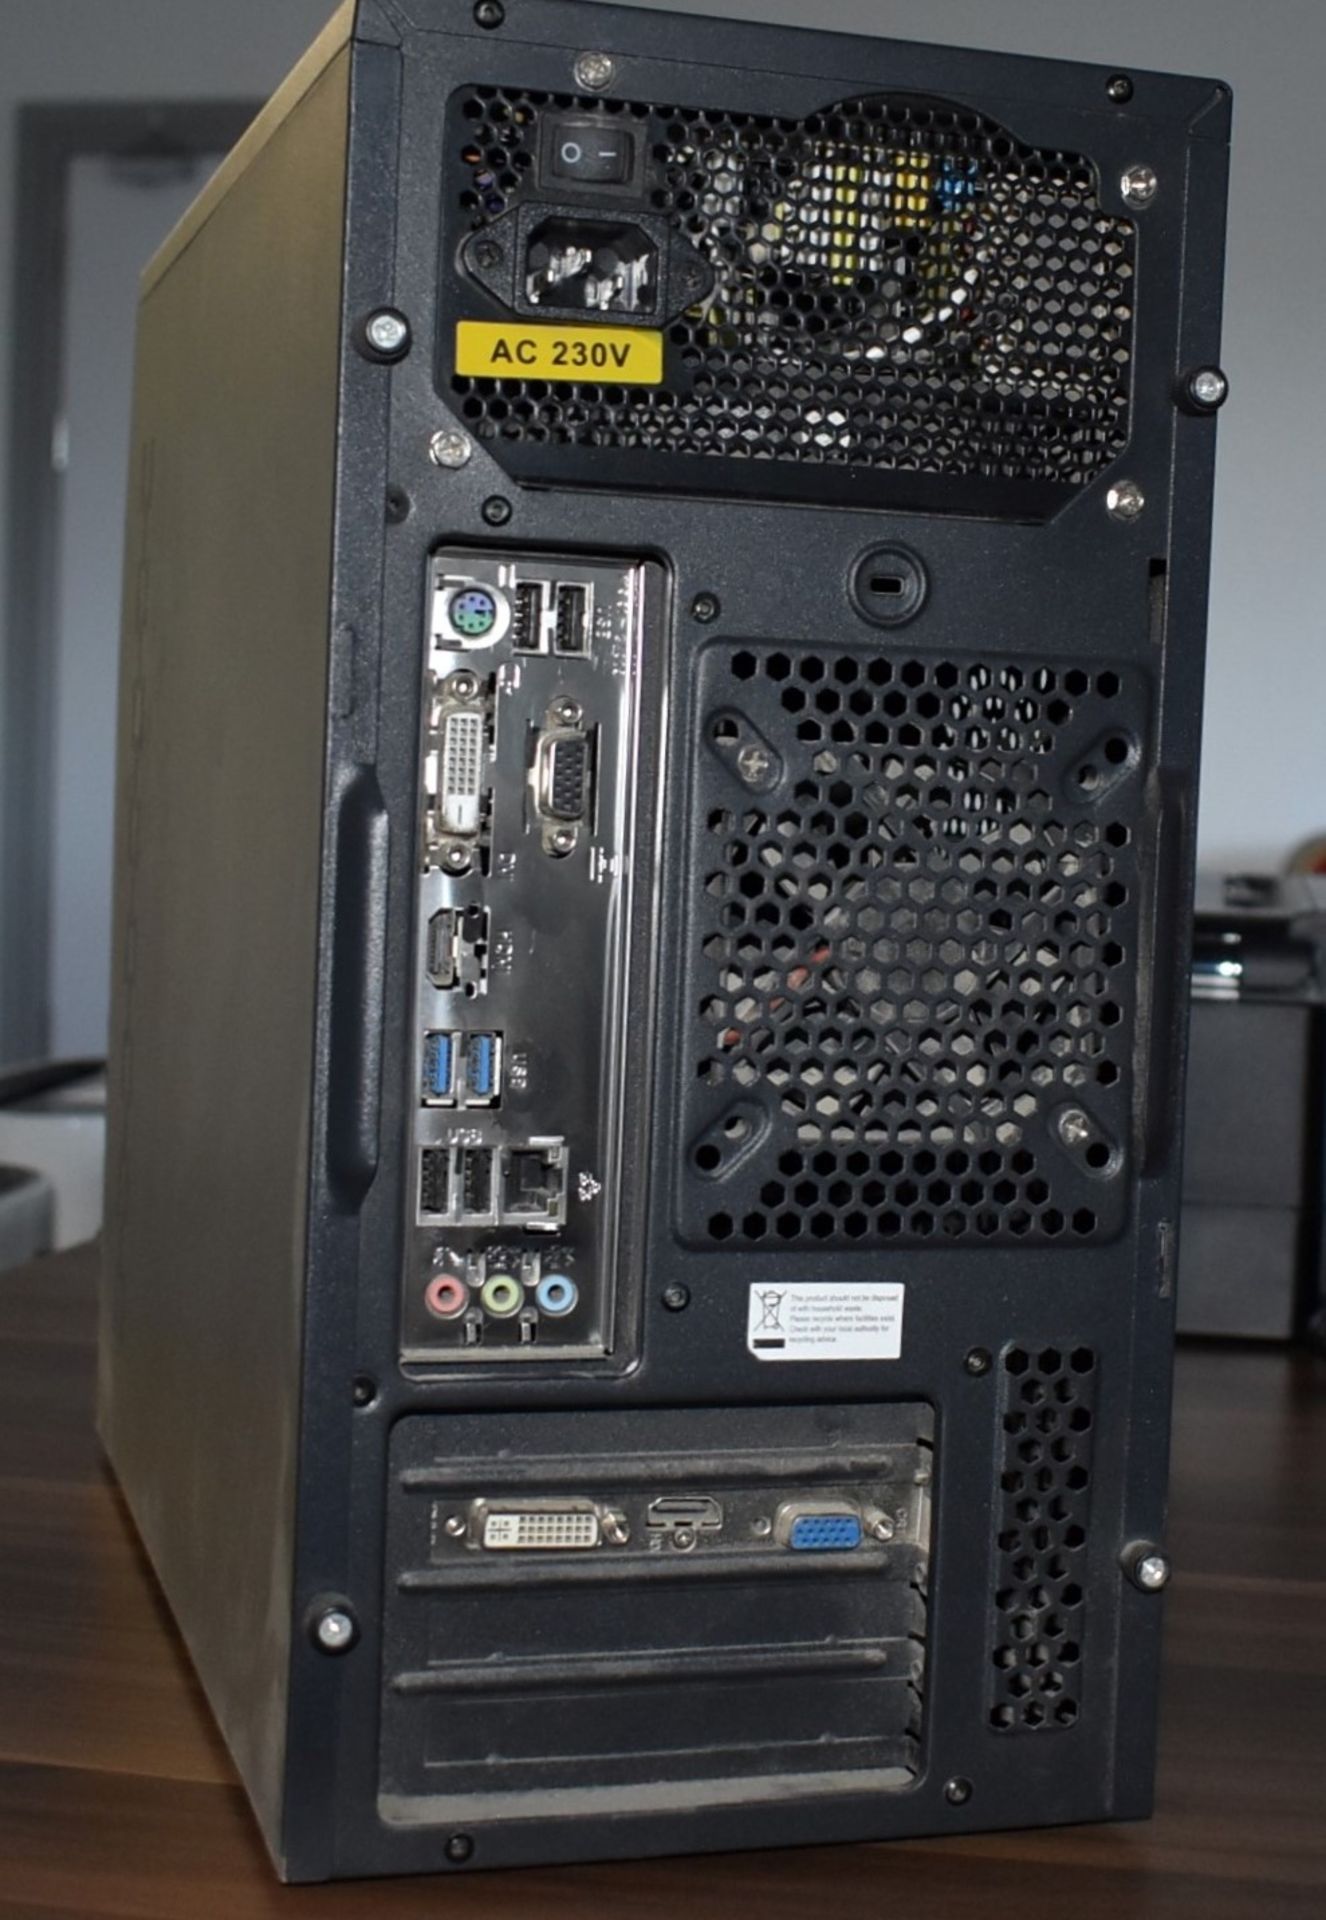 1 x Desktop Computer Featuring an AMD FX4300 Processor, 8GB Ram, 128GB SSD, Liquid Coole - Image 2 of 3